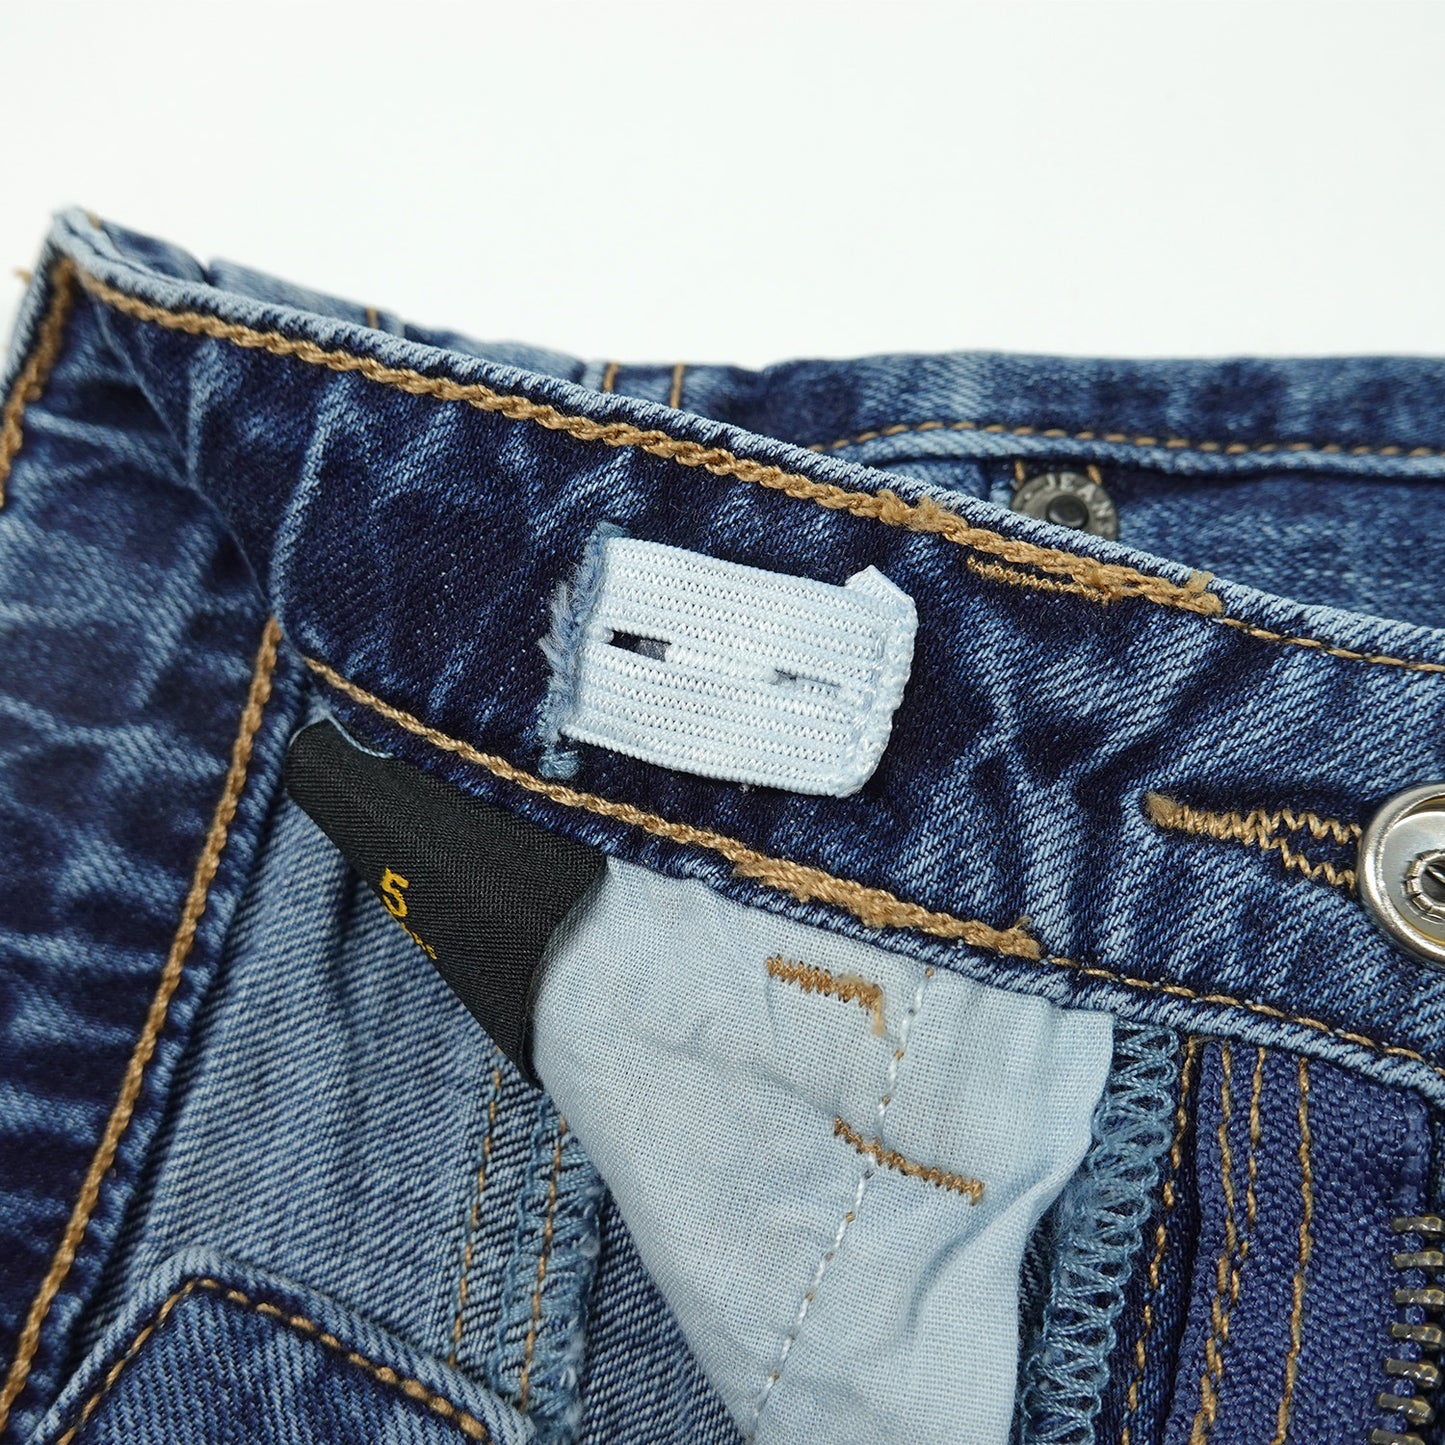 Baby Little Big Girls Jeans,Elastic Waistband Inside Ripped Holes Soft Simple Desgin Denim Pants